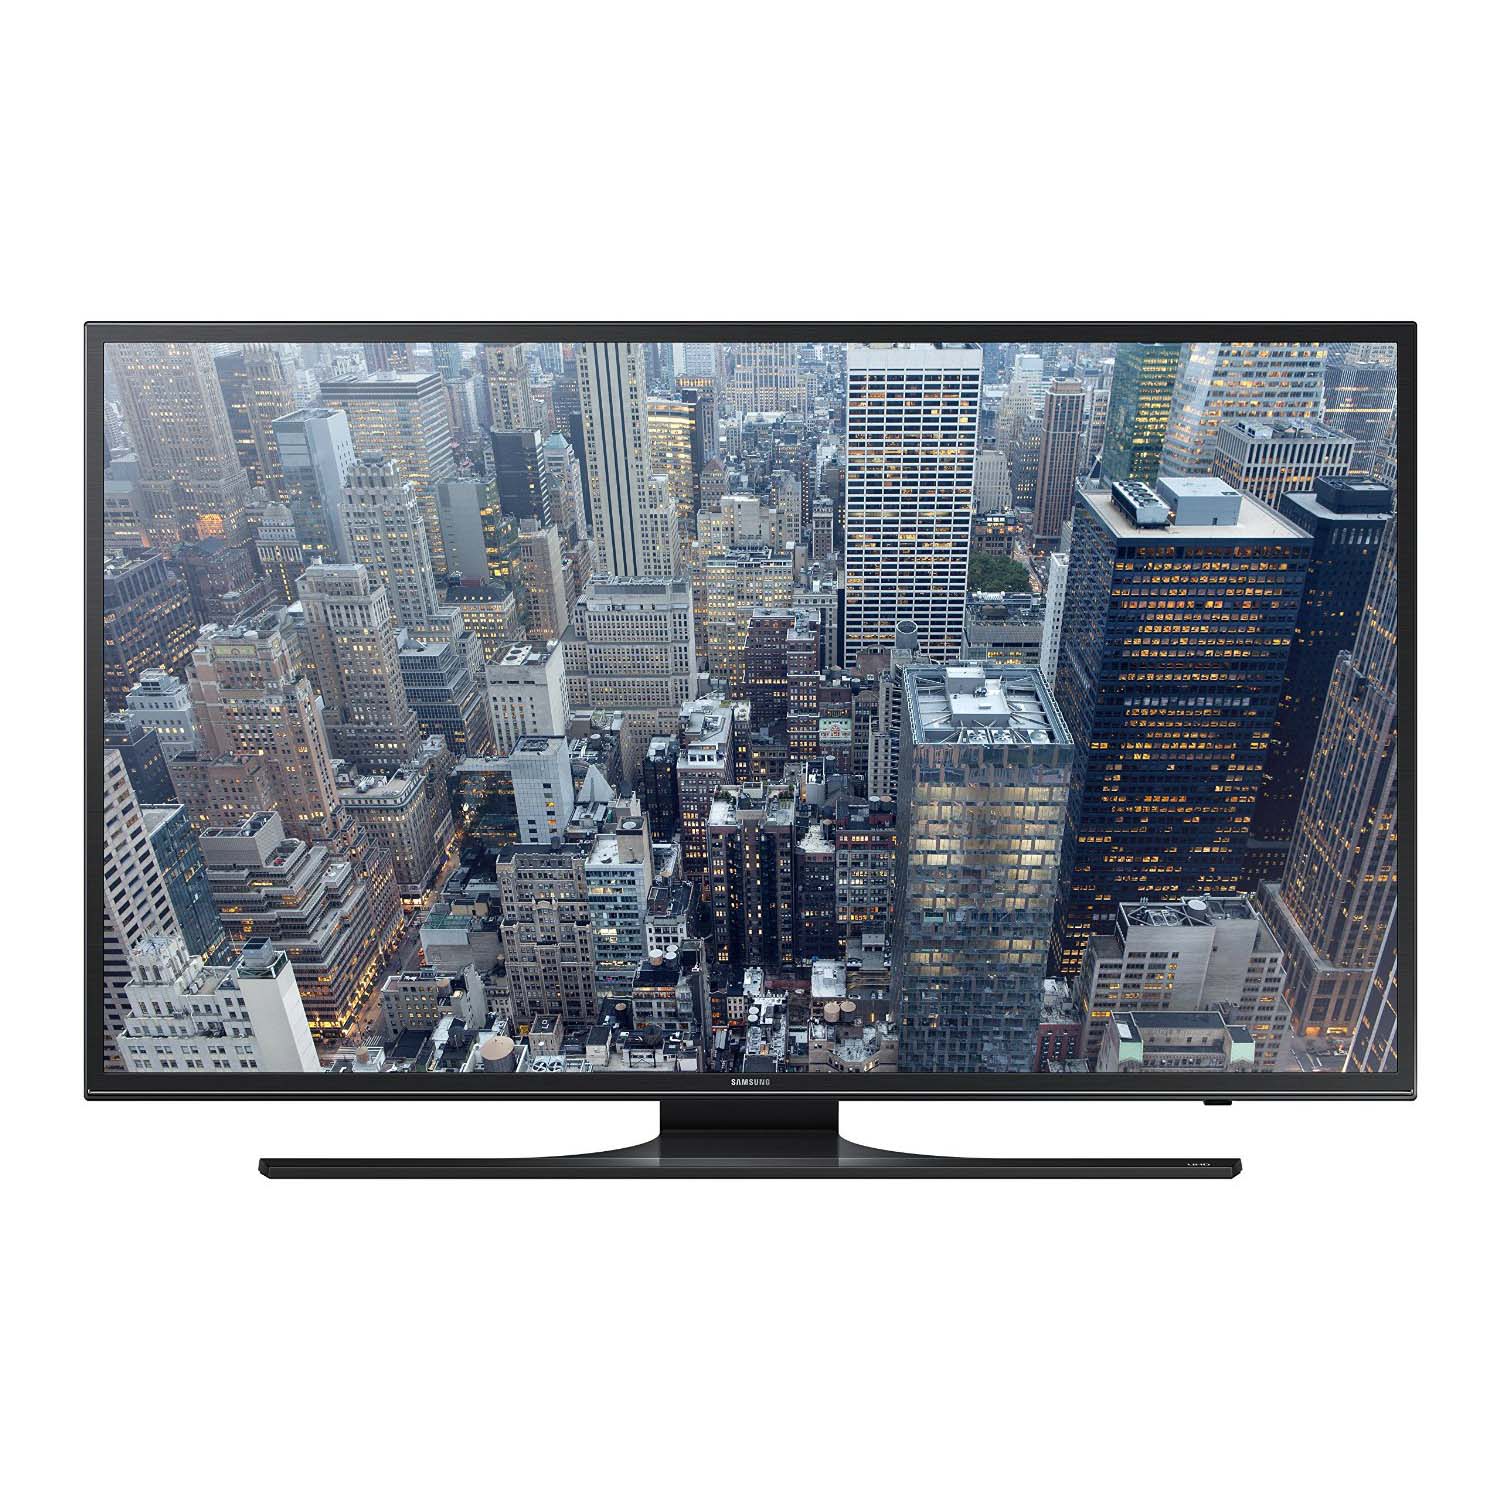 Samsung UN65JU6500 65-Inch 4K Ultra HD Smart LED TV (2015 Model) *관부가세 별도*